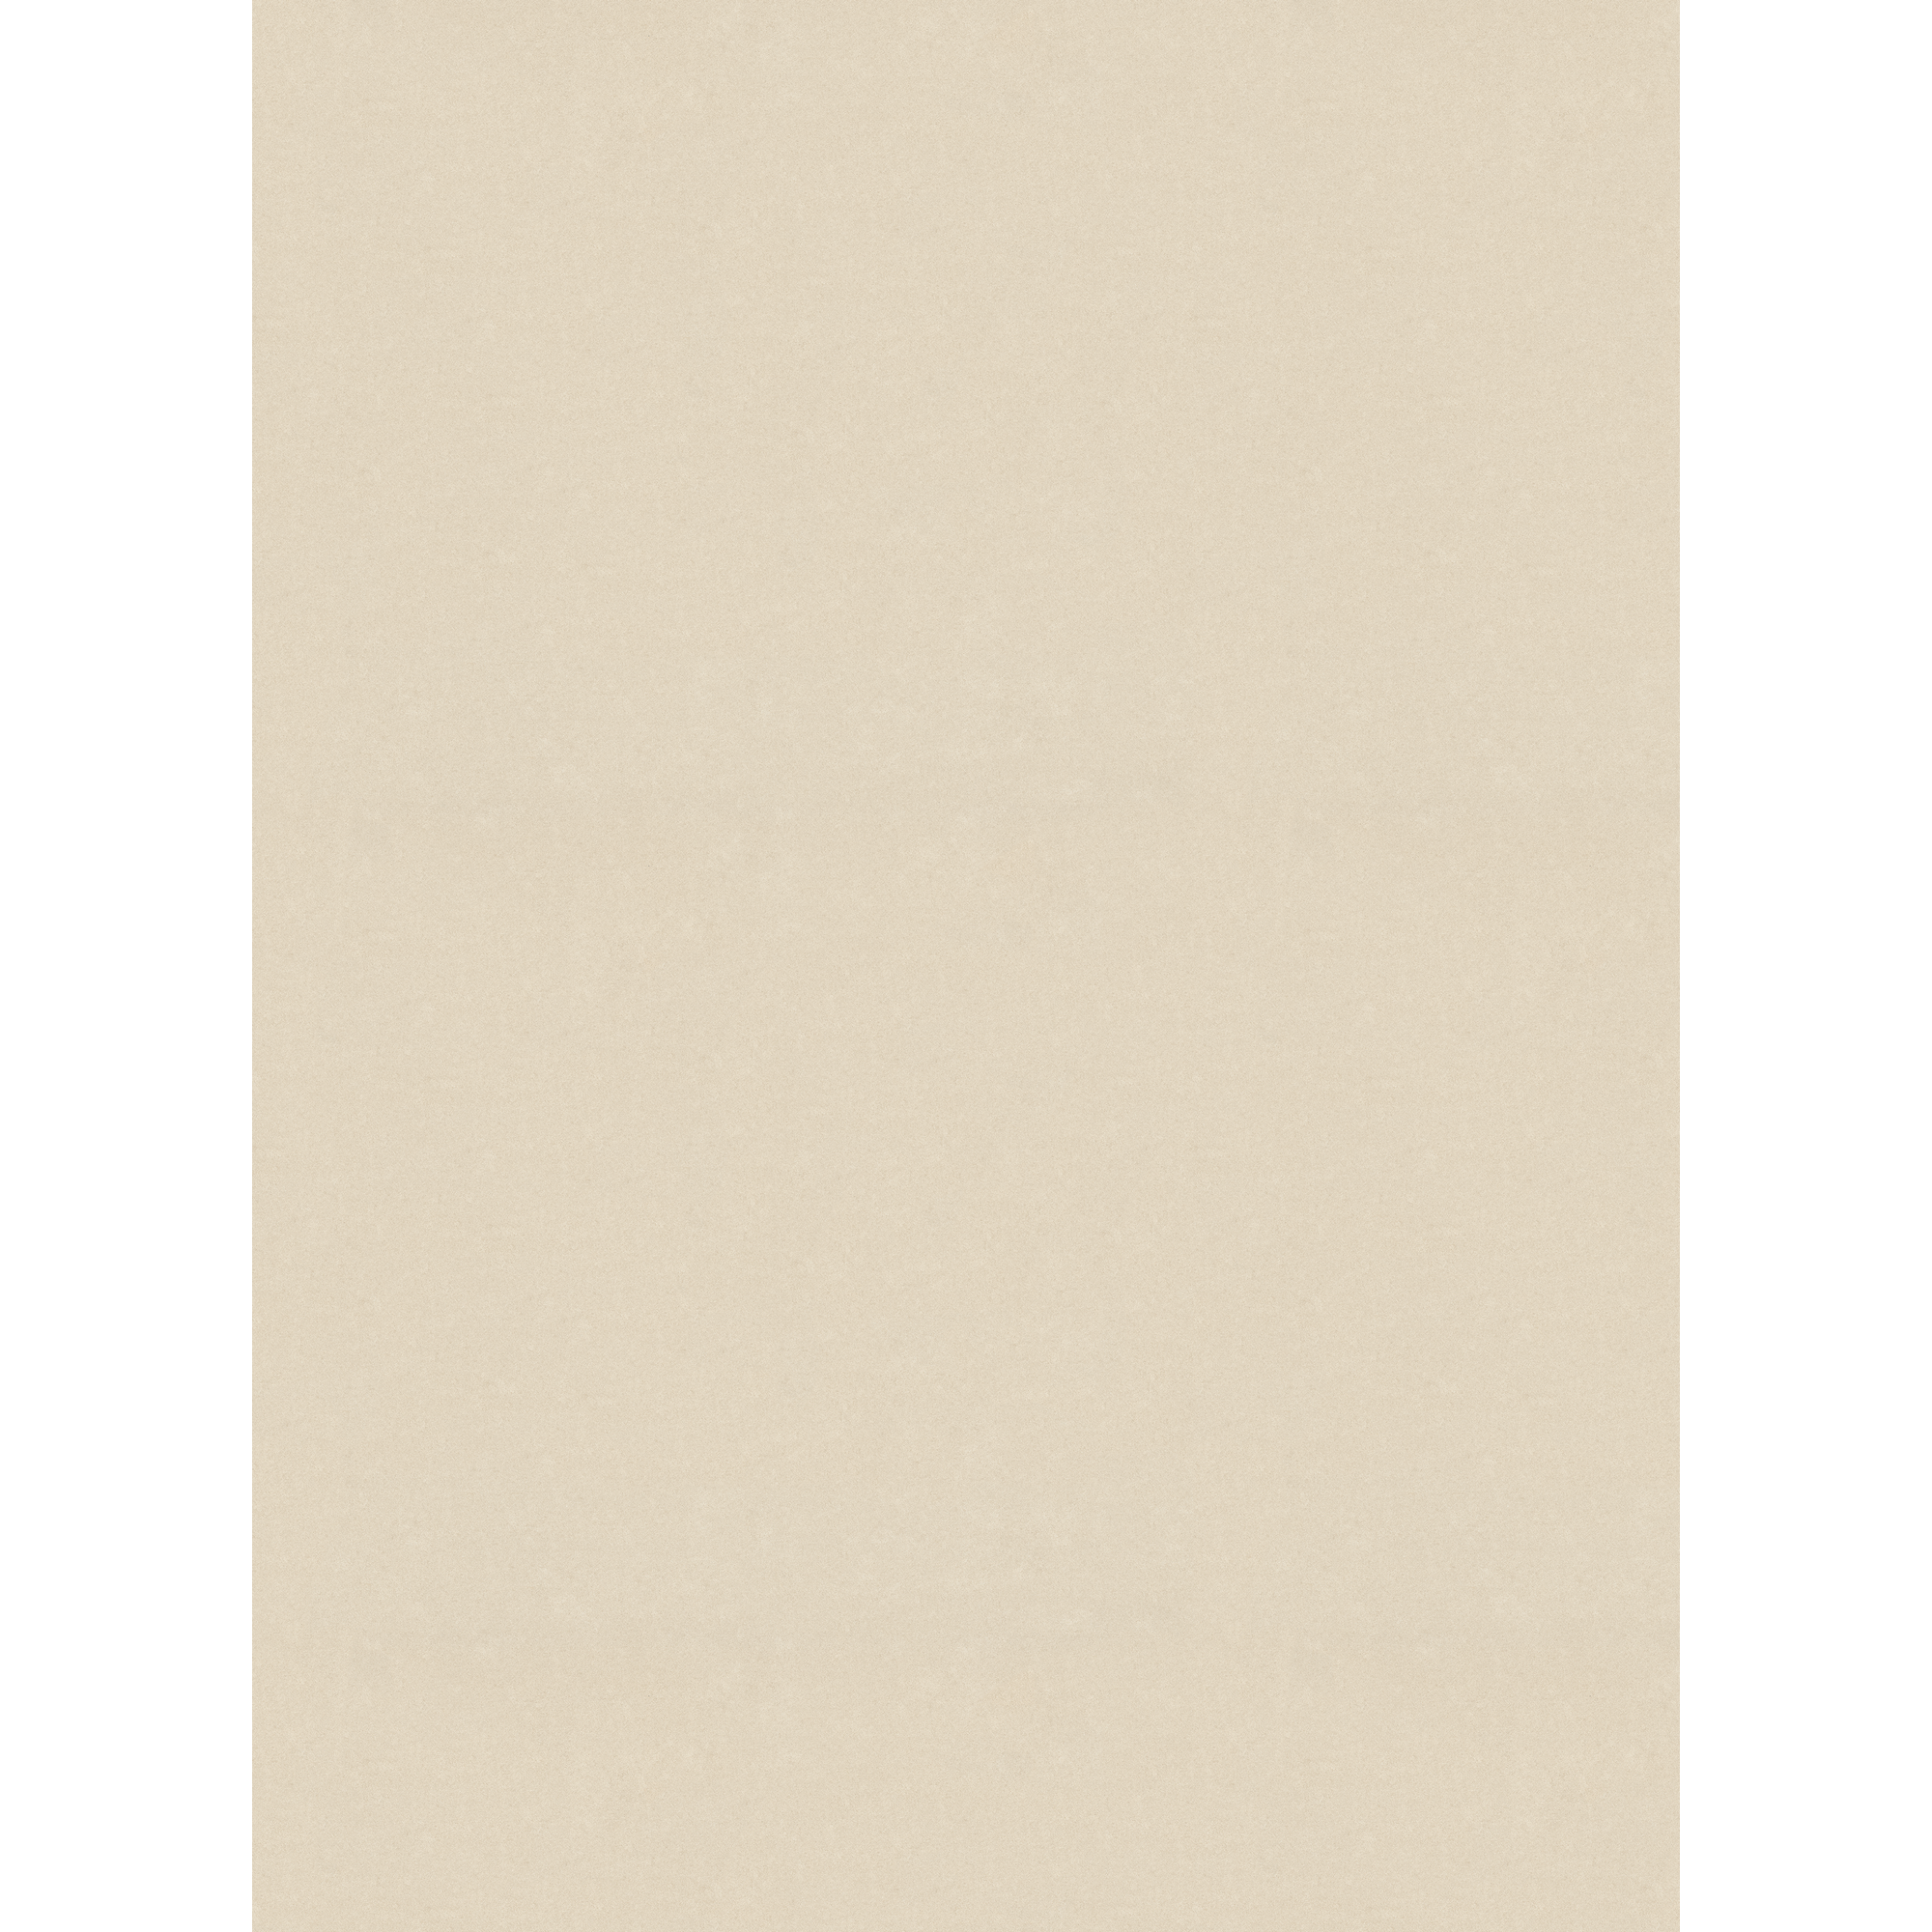 Arbeitsplatte 'Sahara' grau/beige 2750 x 600 x 38 mm + product picture